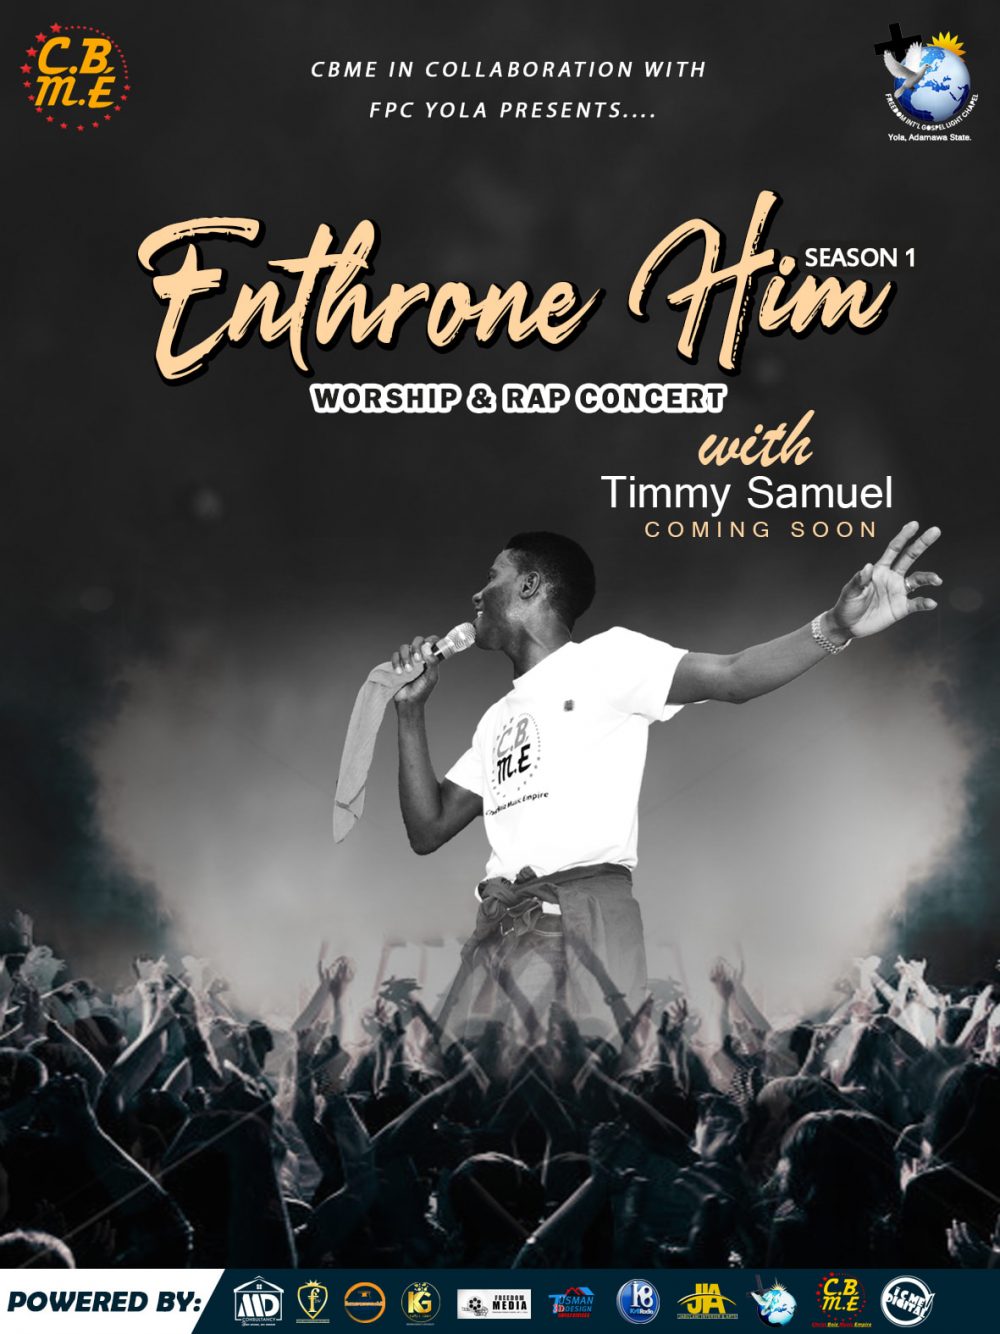 Watch Out For Enthrone Him 2021 | Timmy Samuel @gospeltrendz.com